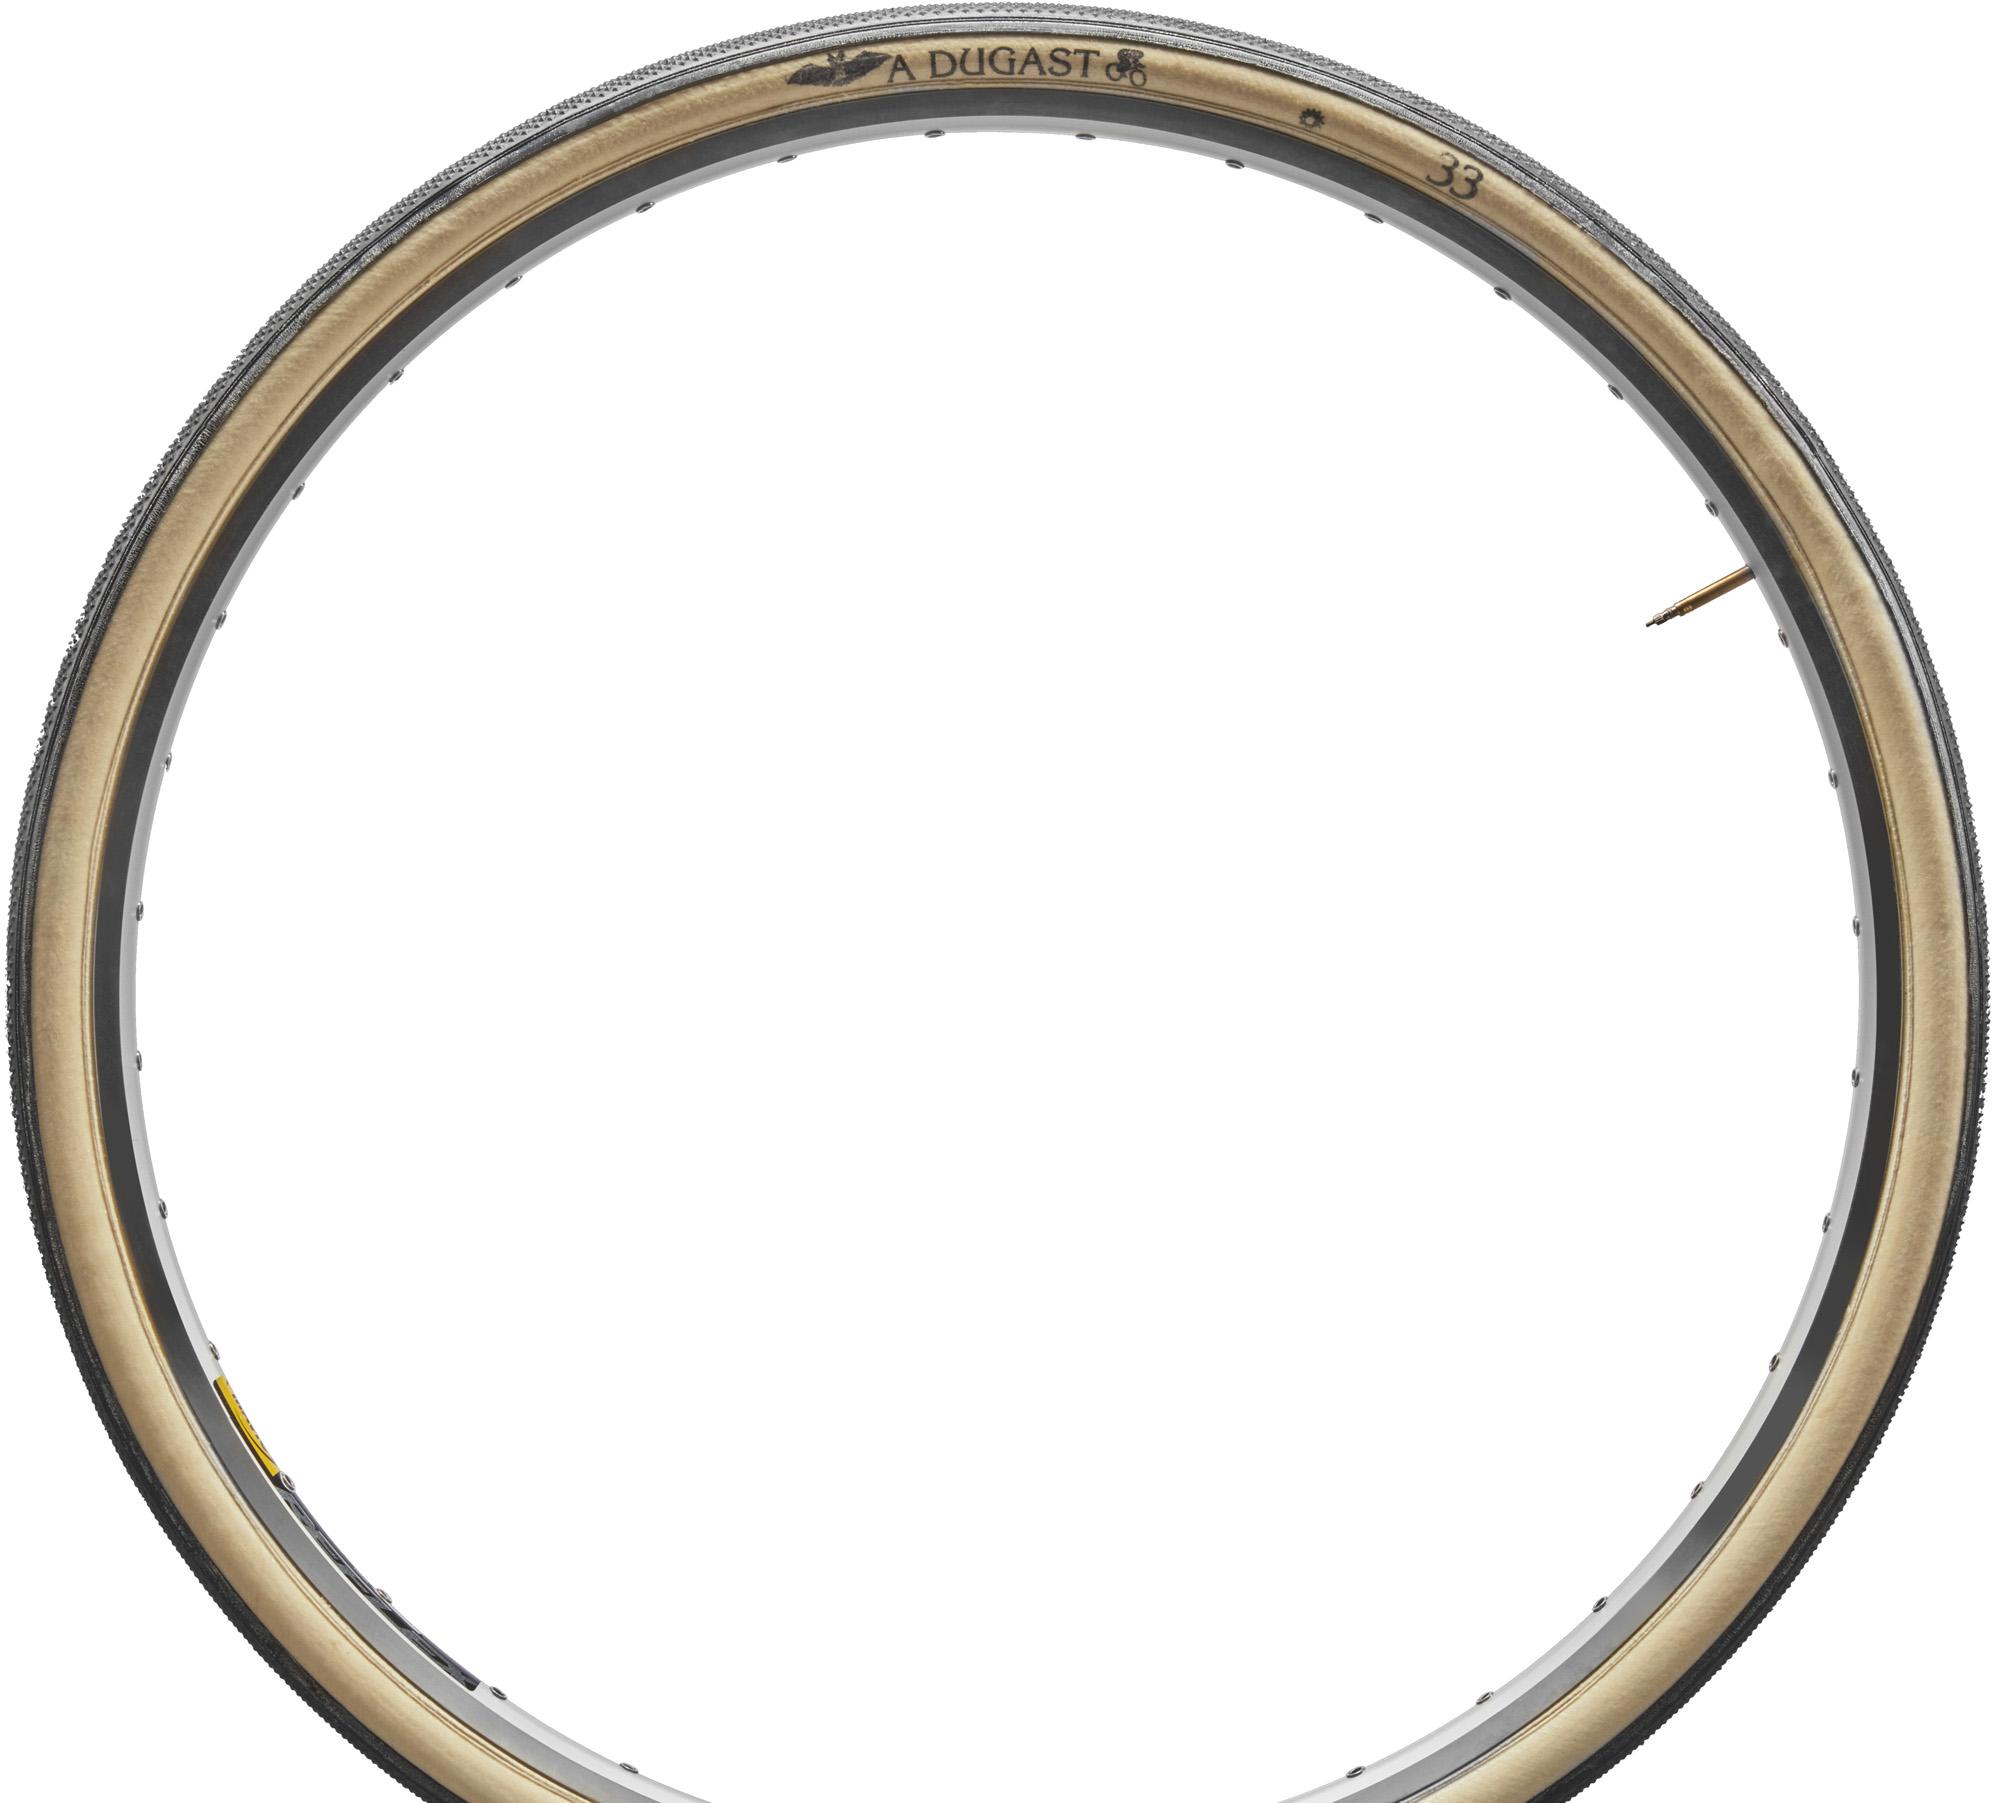 Image of Dugast Pipistrello Cyclocross Tyre - Black/Tan Wall